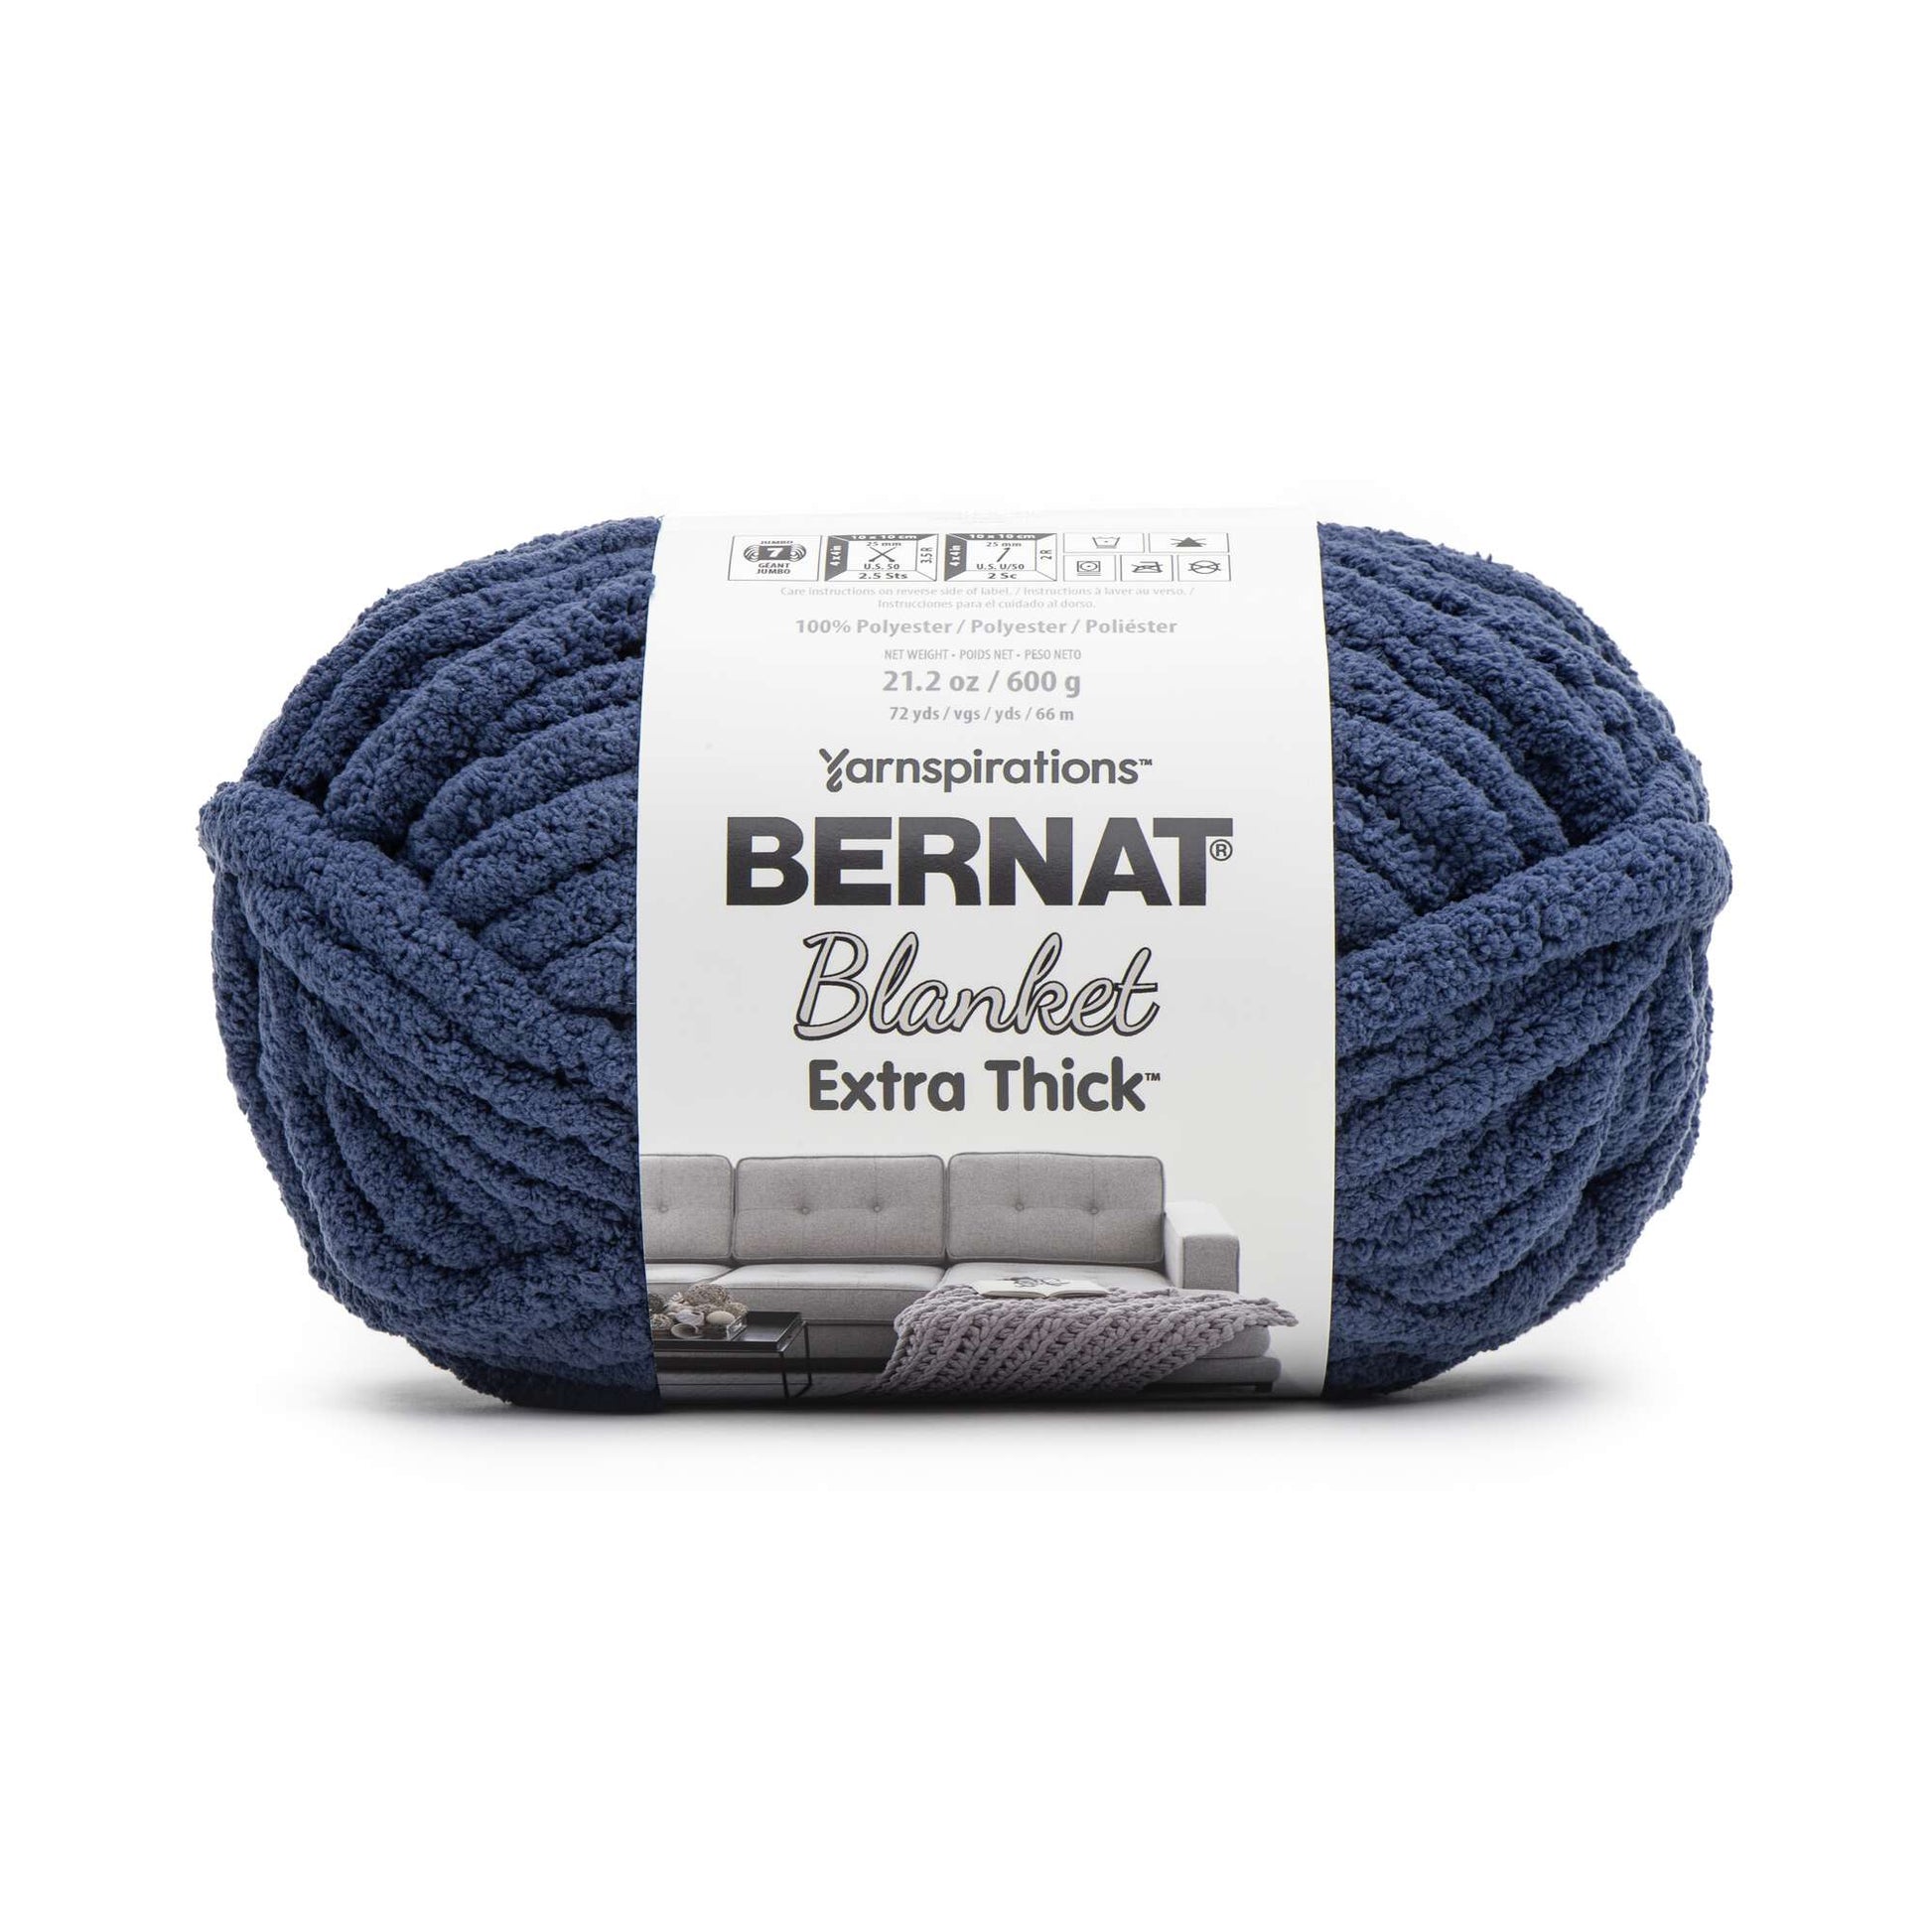 Bernat Blanket Extra Thick Yarn (600g/21.2oz) - Discontinued Shades Navy